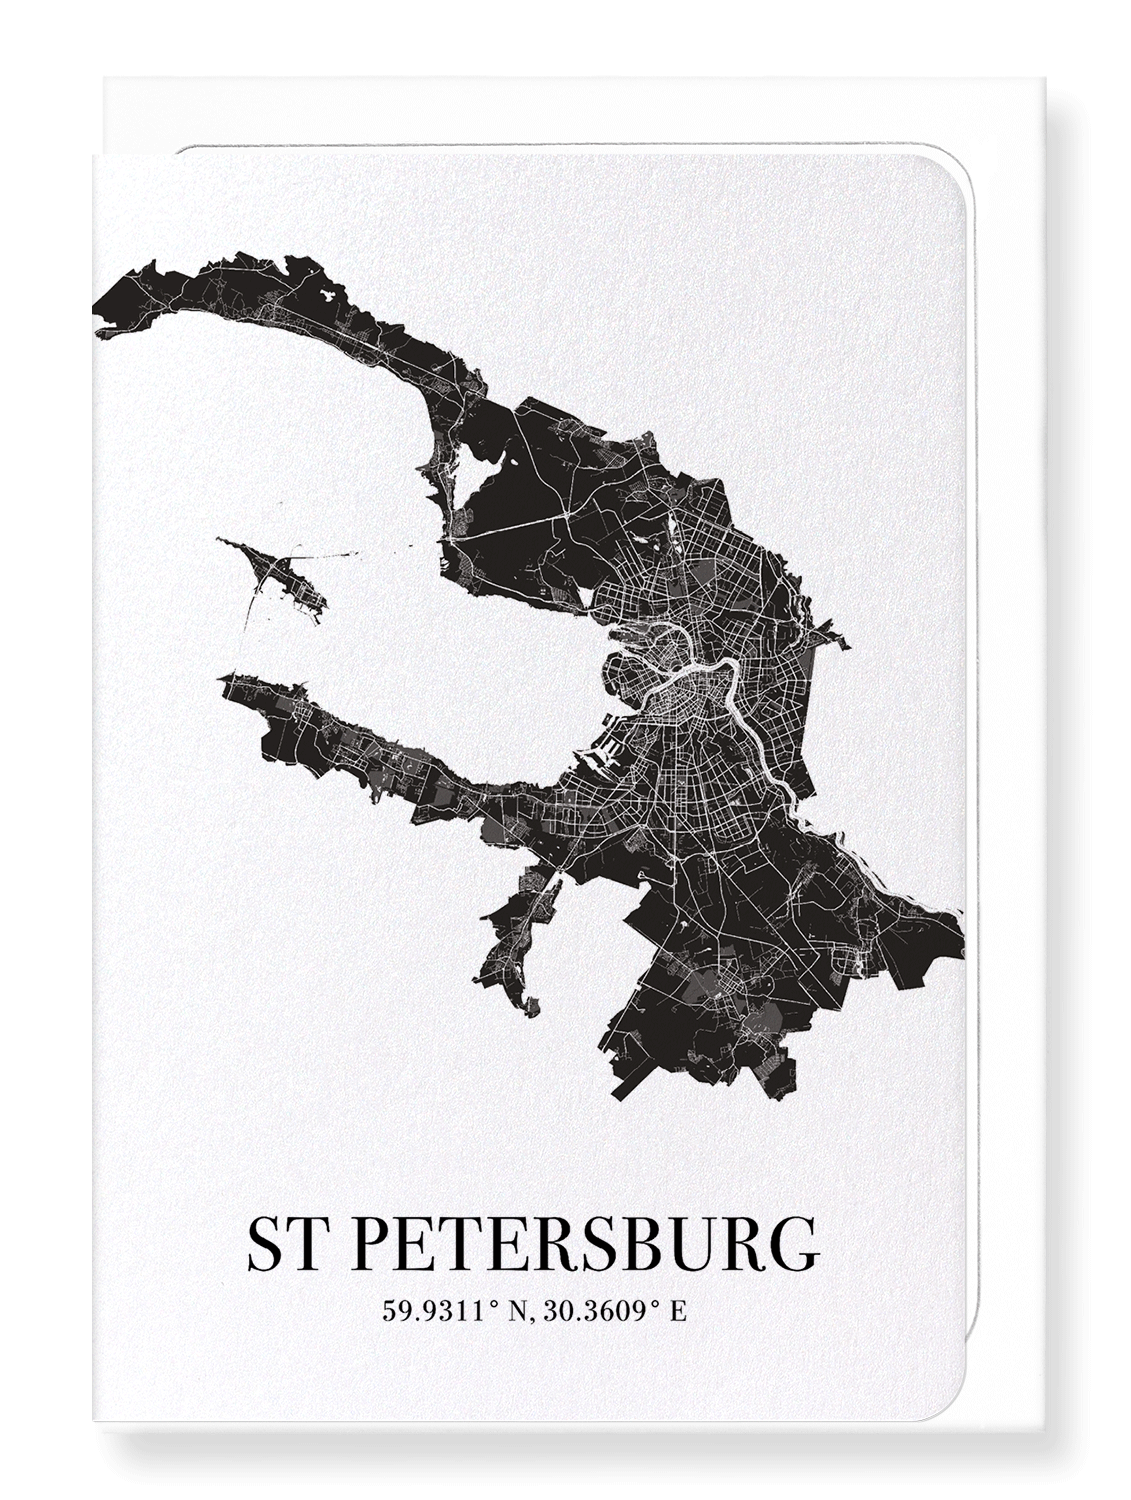 ST PETERSBURG CUTOUT: Map Cutout Greeting Card